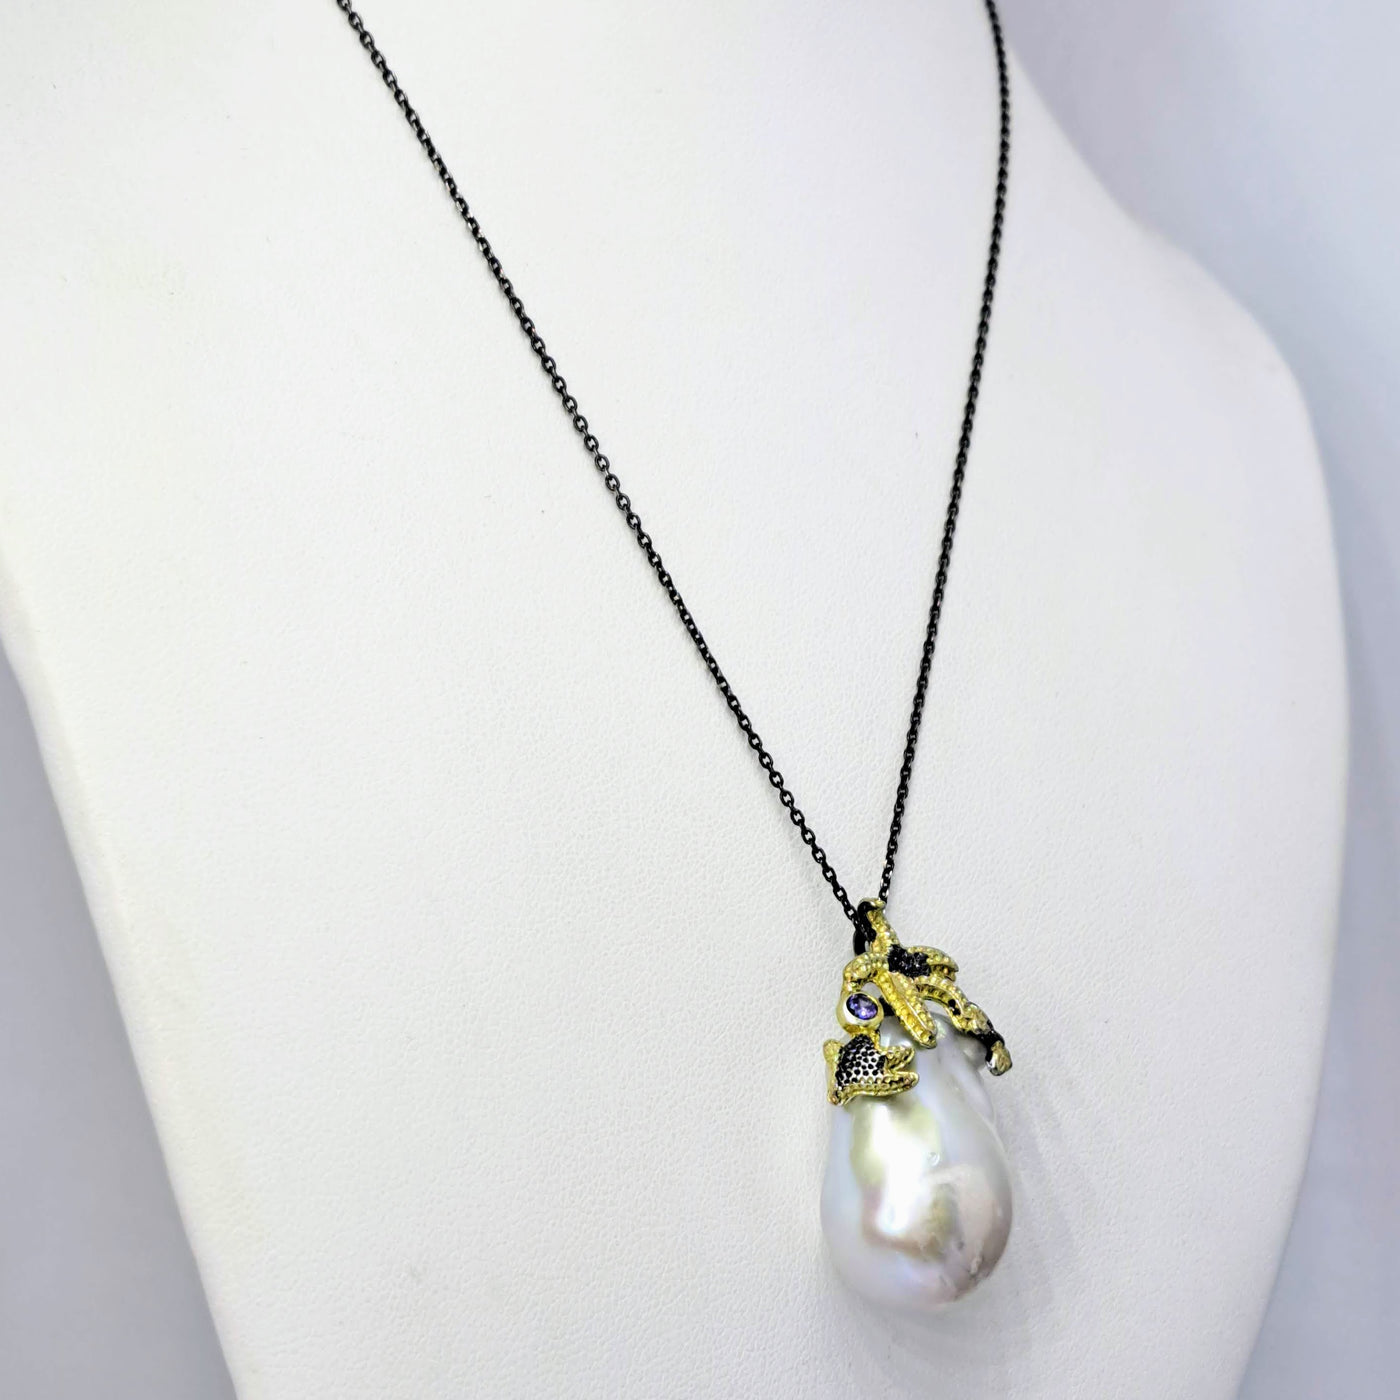 "Ocean Star" Pendant Necklace - Baroque Pearl, Amethyst, Black Sterling, 18k